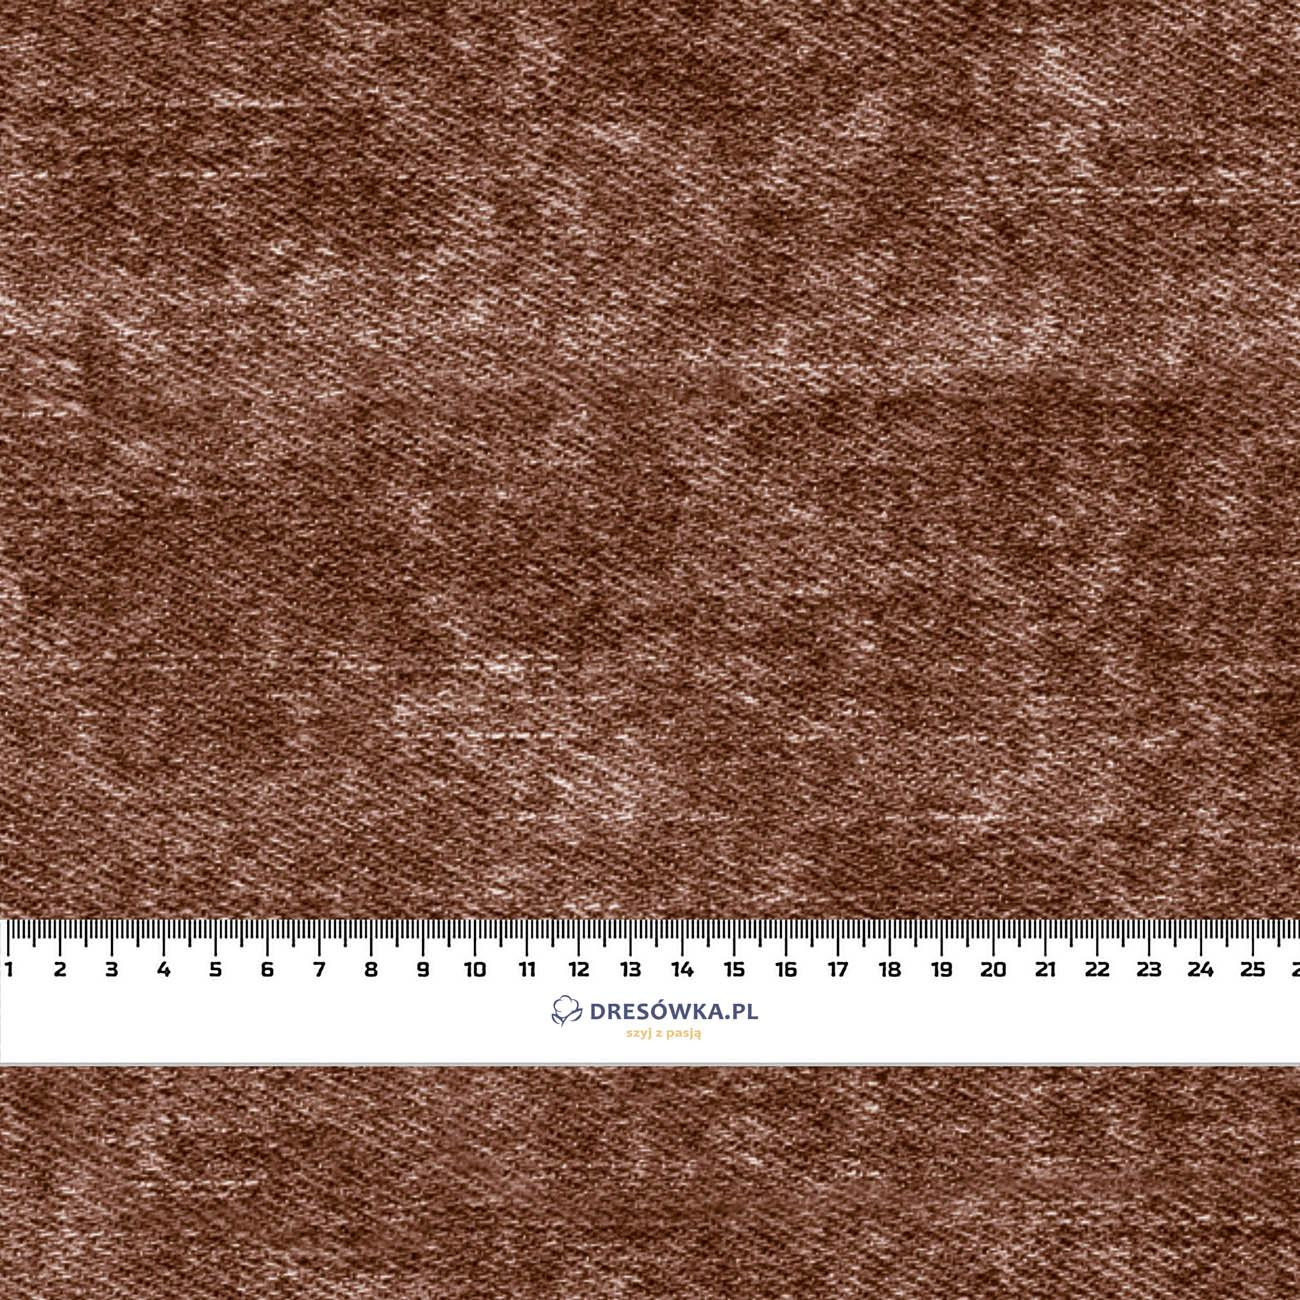 VINTAGE LOOK JEANS (brown) - single jersey with elastane 